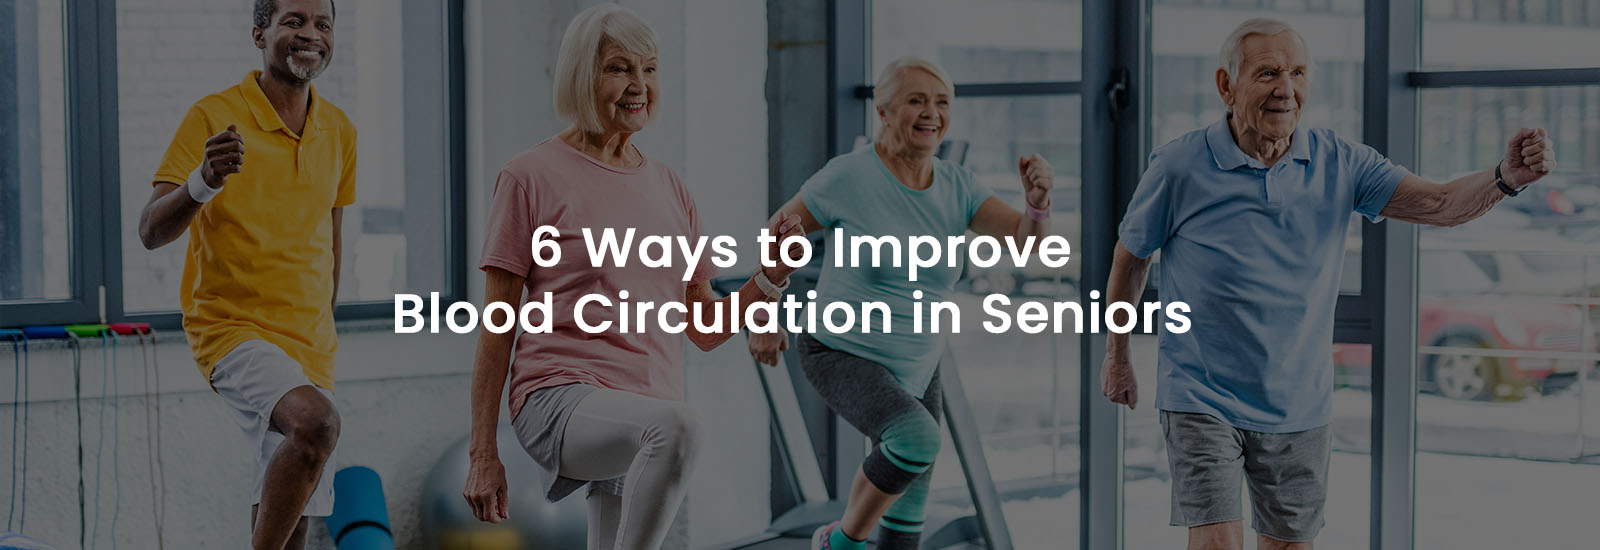 6 Ways to Improve Blood Circulation in Seniors | Banner Image